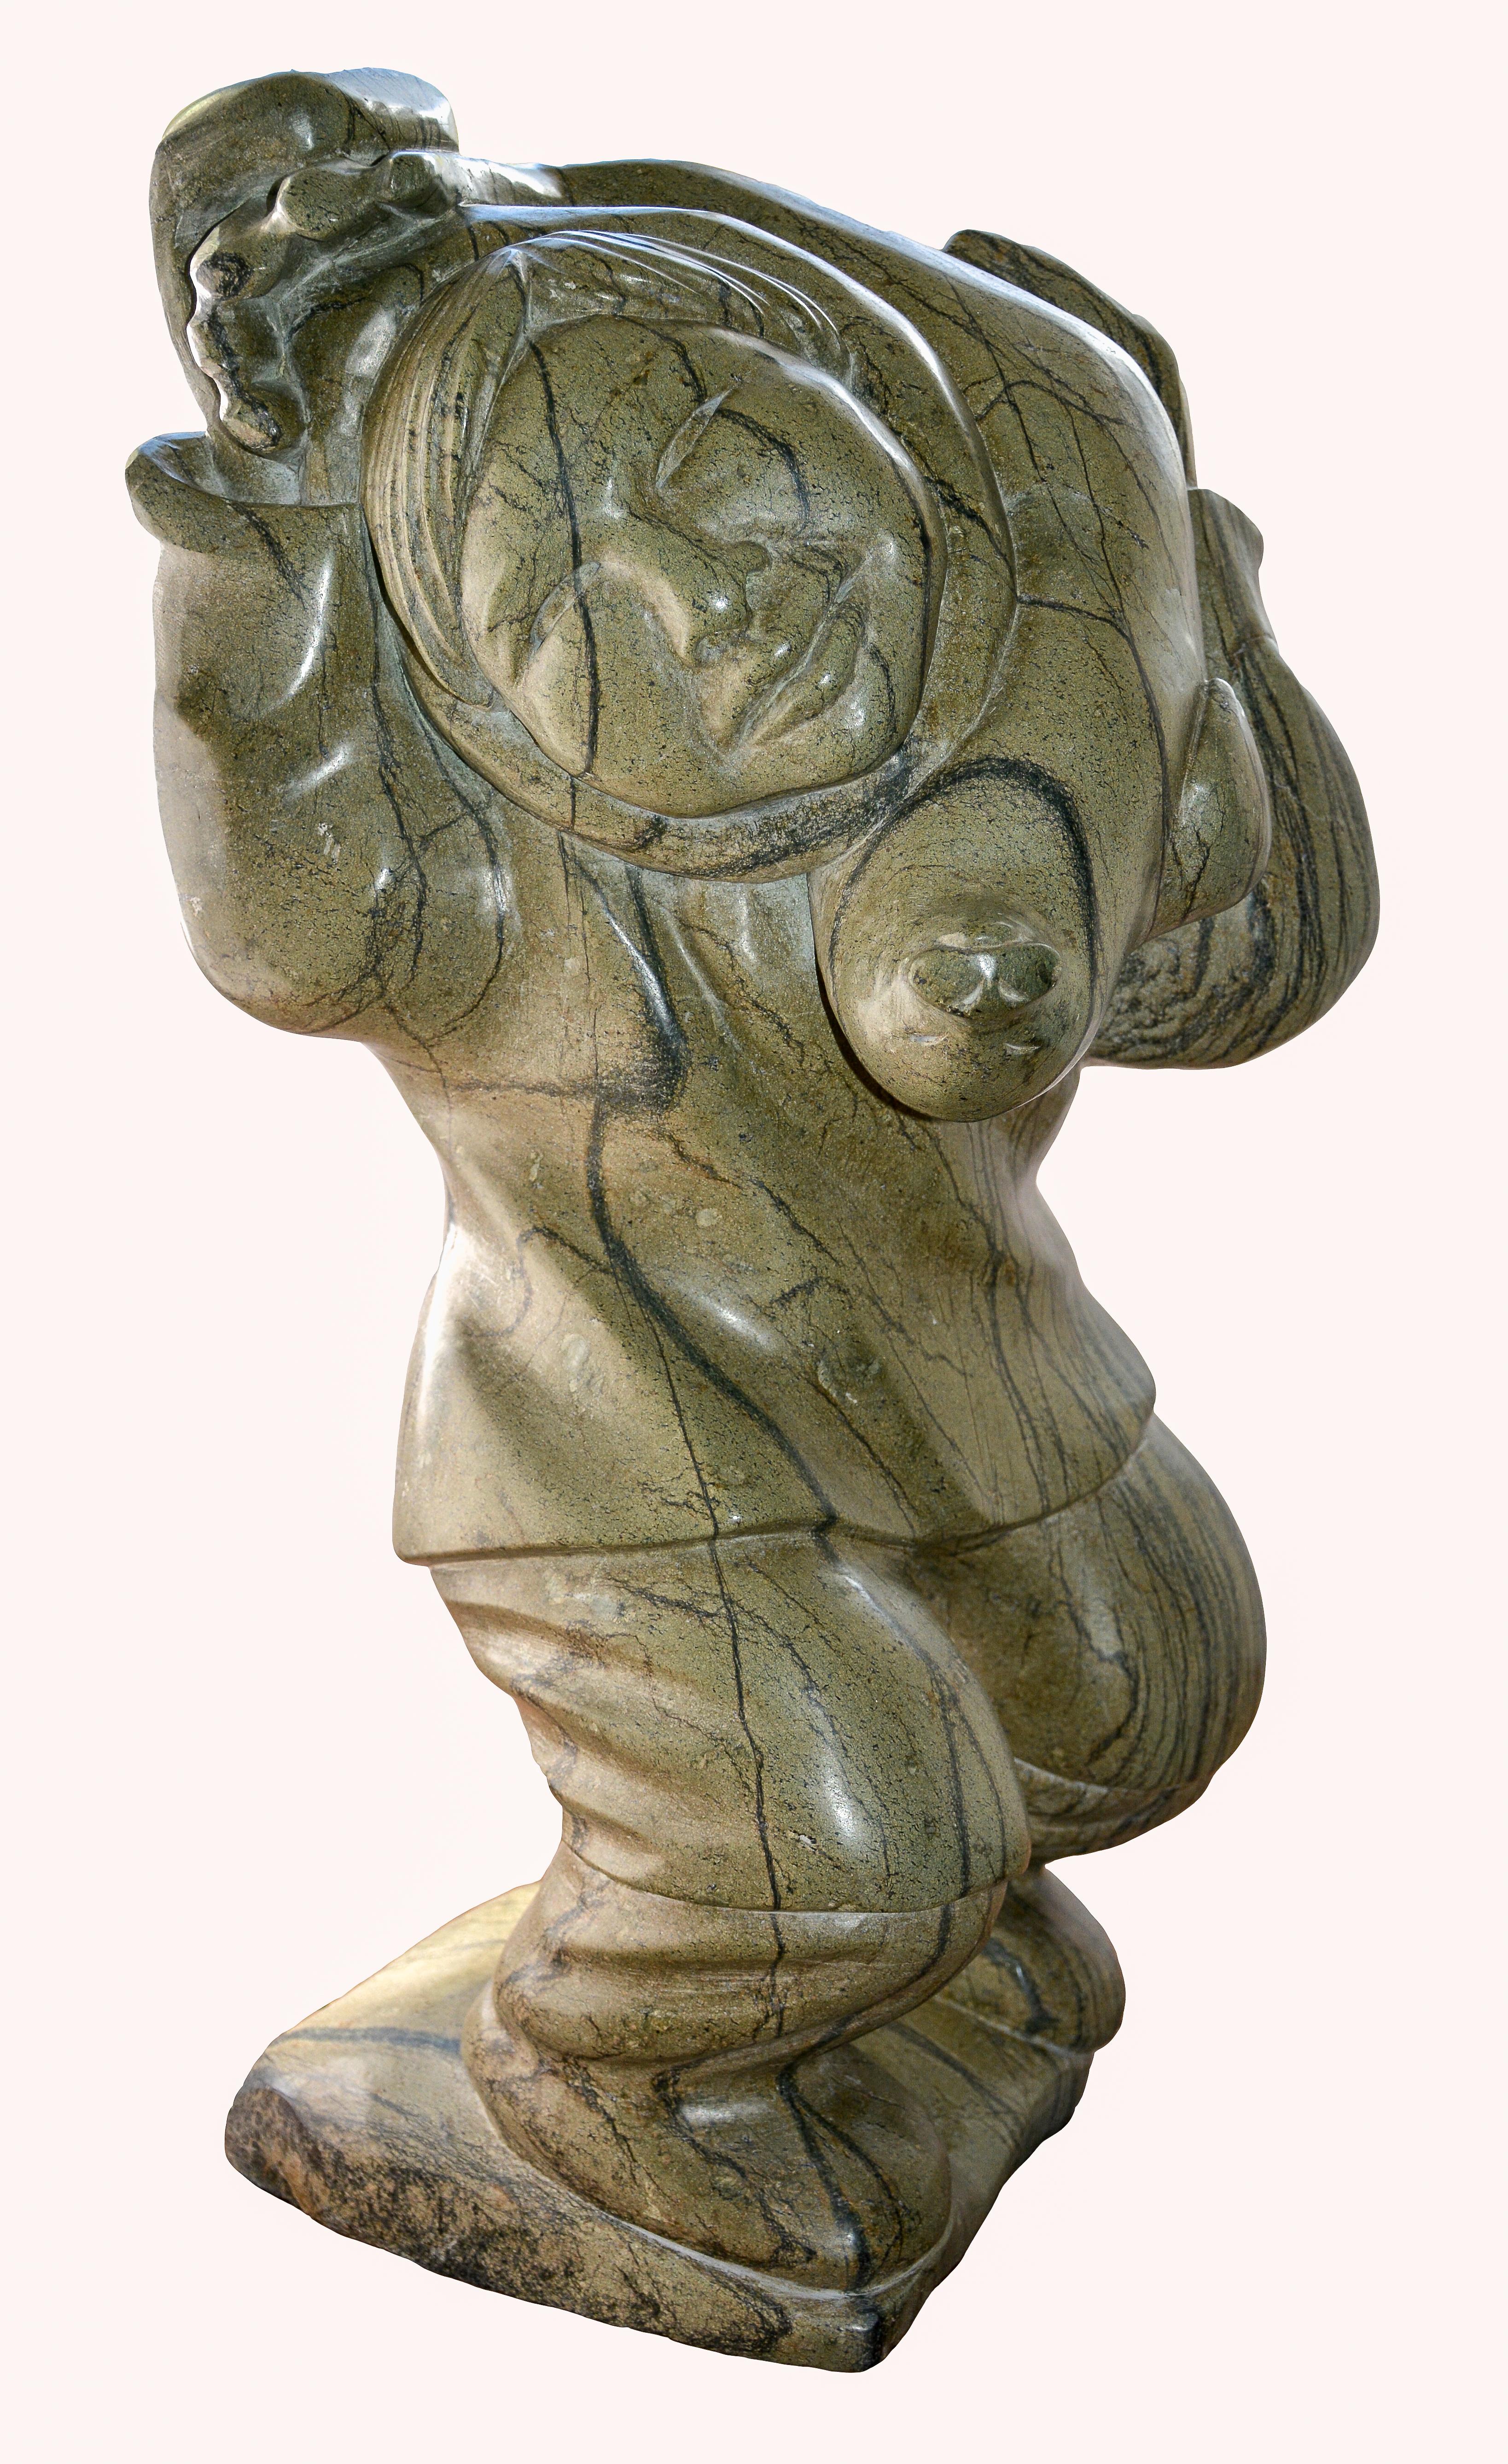 Chasseur et sceau - Sculpture de Kiawak Ashoona